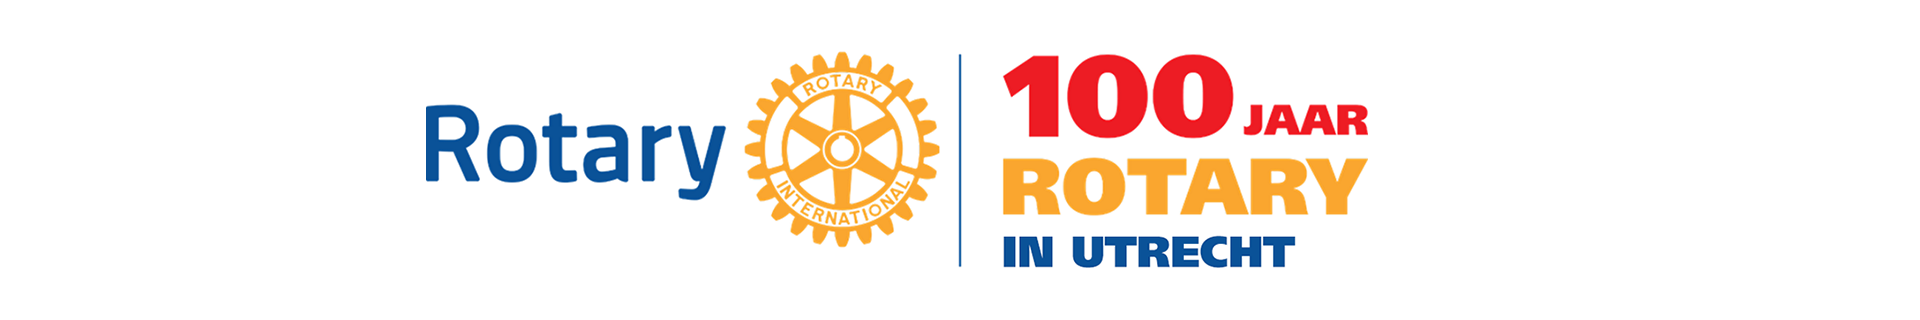 Rotary Club Utrecht 100 